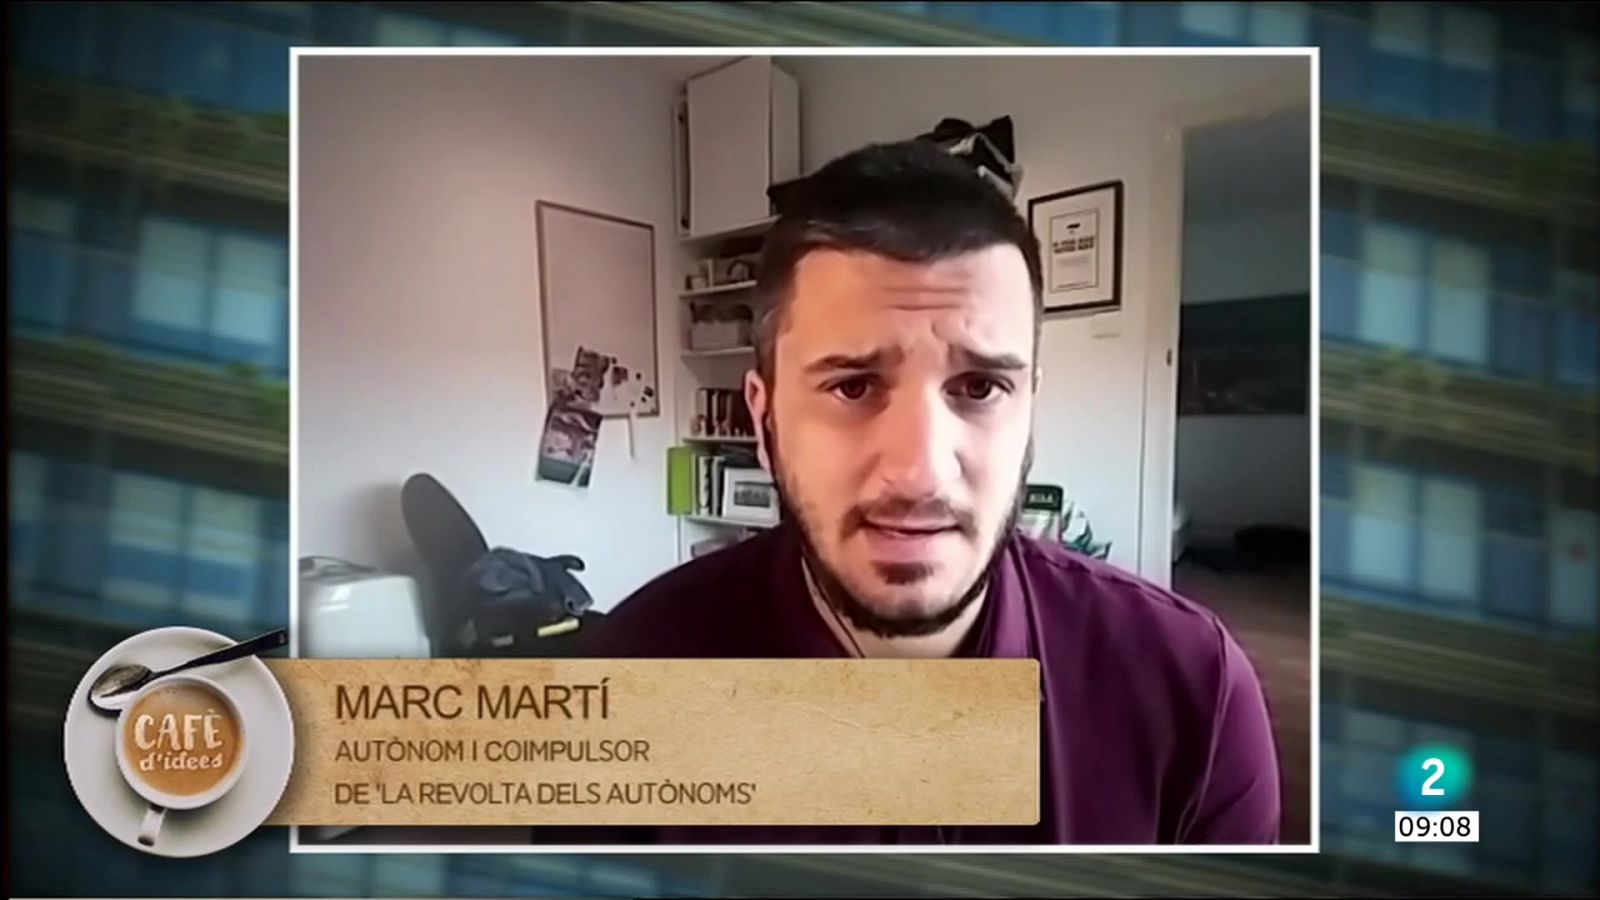 Marc Martí: "És imperdonable! Toca dimitir!" | Cafè d'idees - RTVE Catalunya